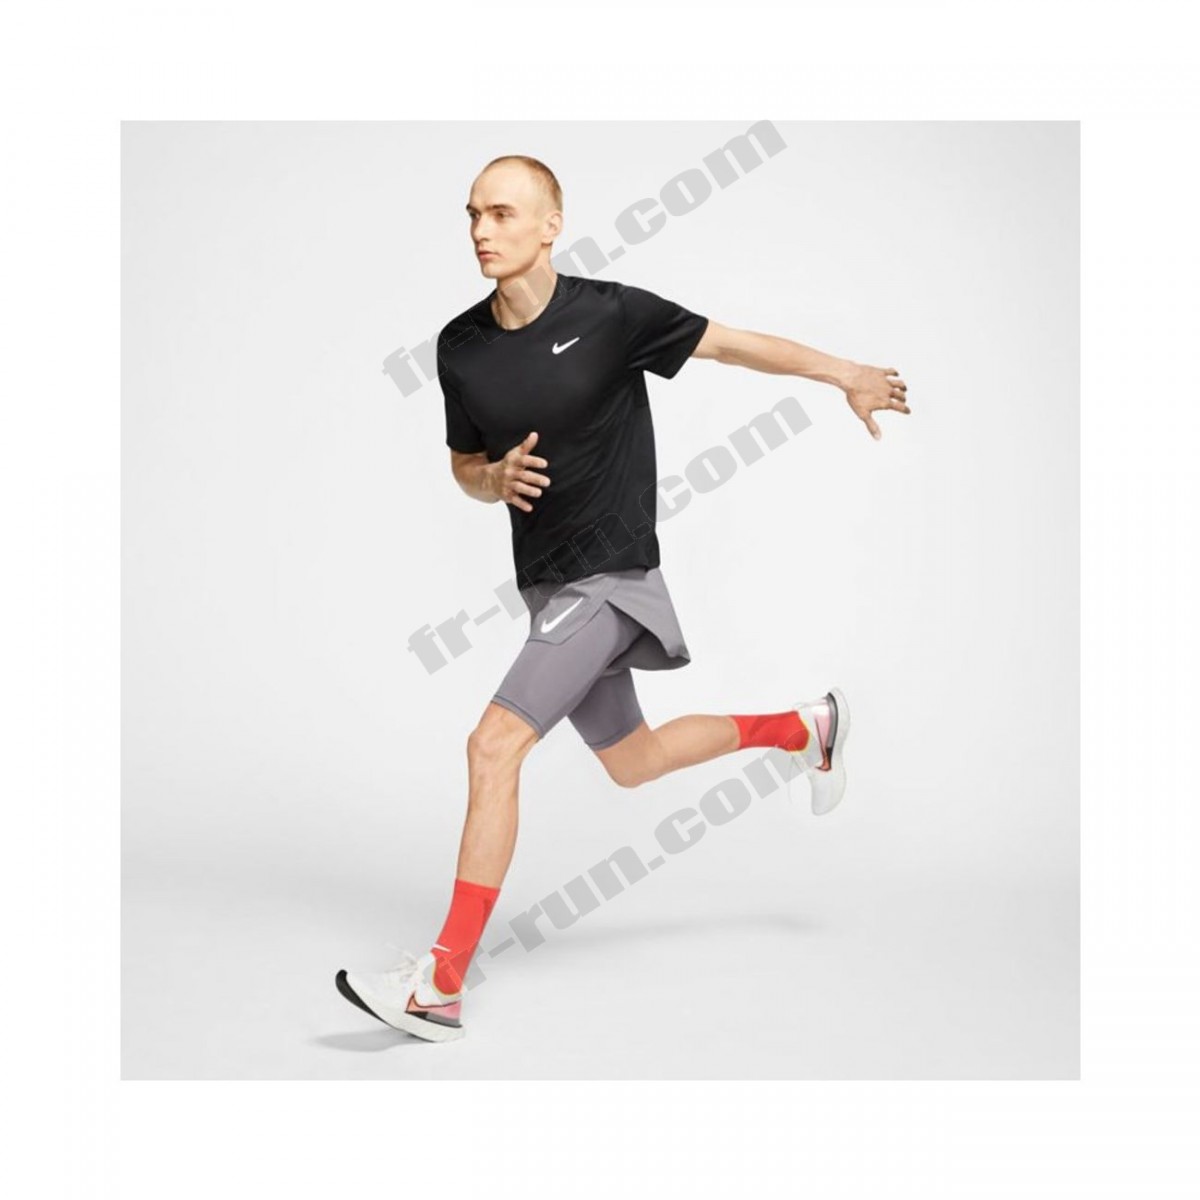 Nike/running homme NIKE Nike Breathe Run √ Nouveau style √ Soldes - -9